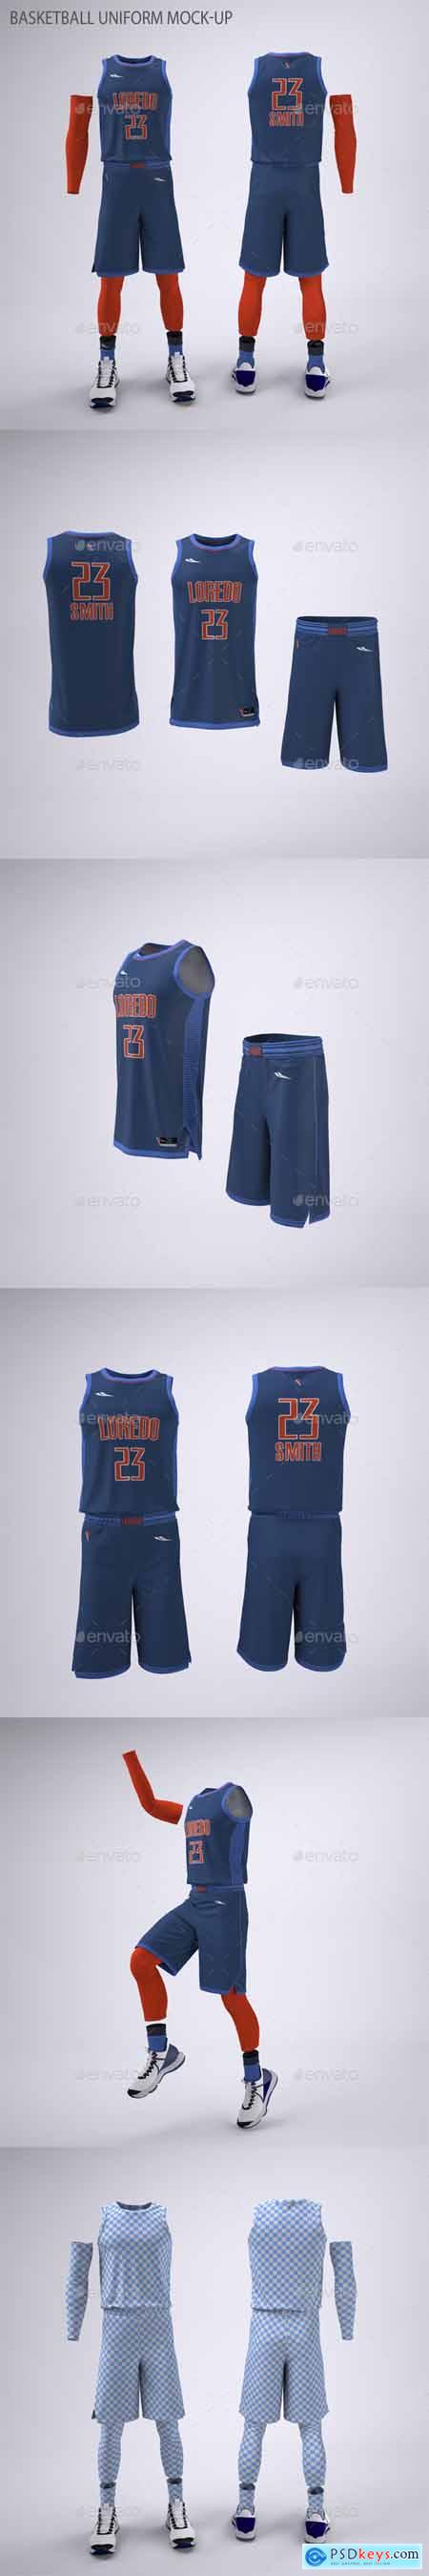 Basketball Jersey and Shorts Uniform Mock-Up 21586628